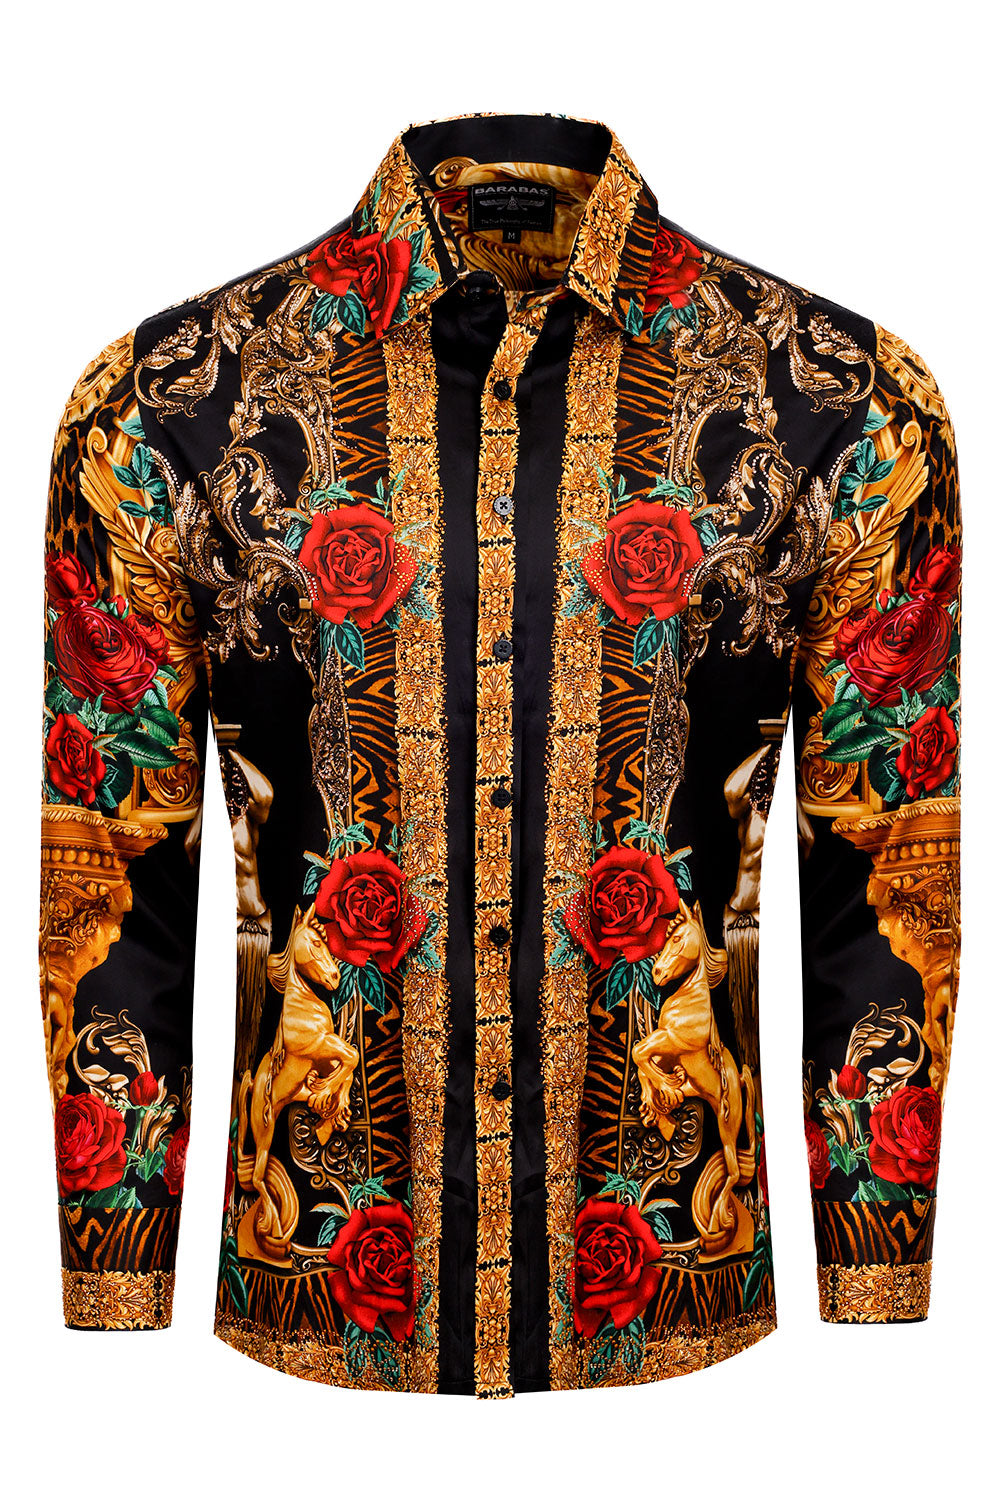 BARABAS Men's Rhinestone Floral Unicorn Long Sleeve Shirts 3SPR418 Black Gold